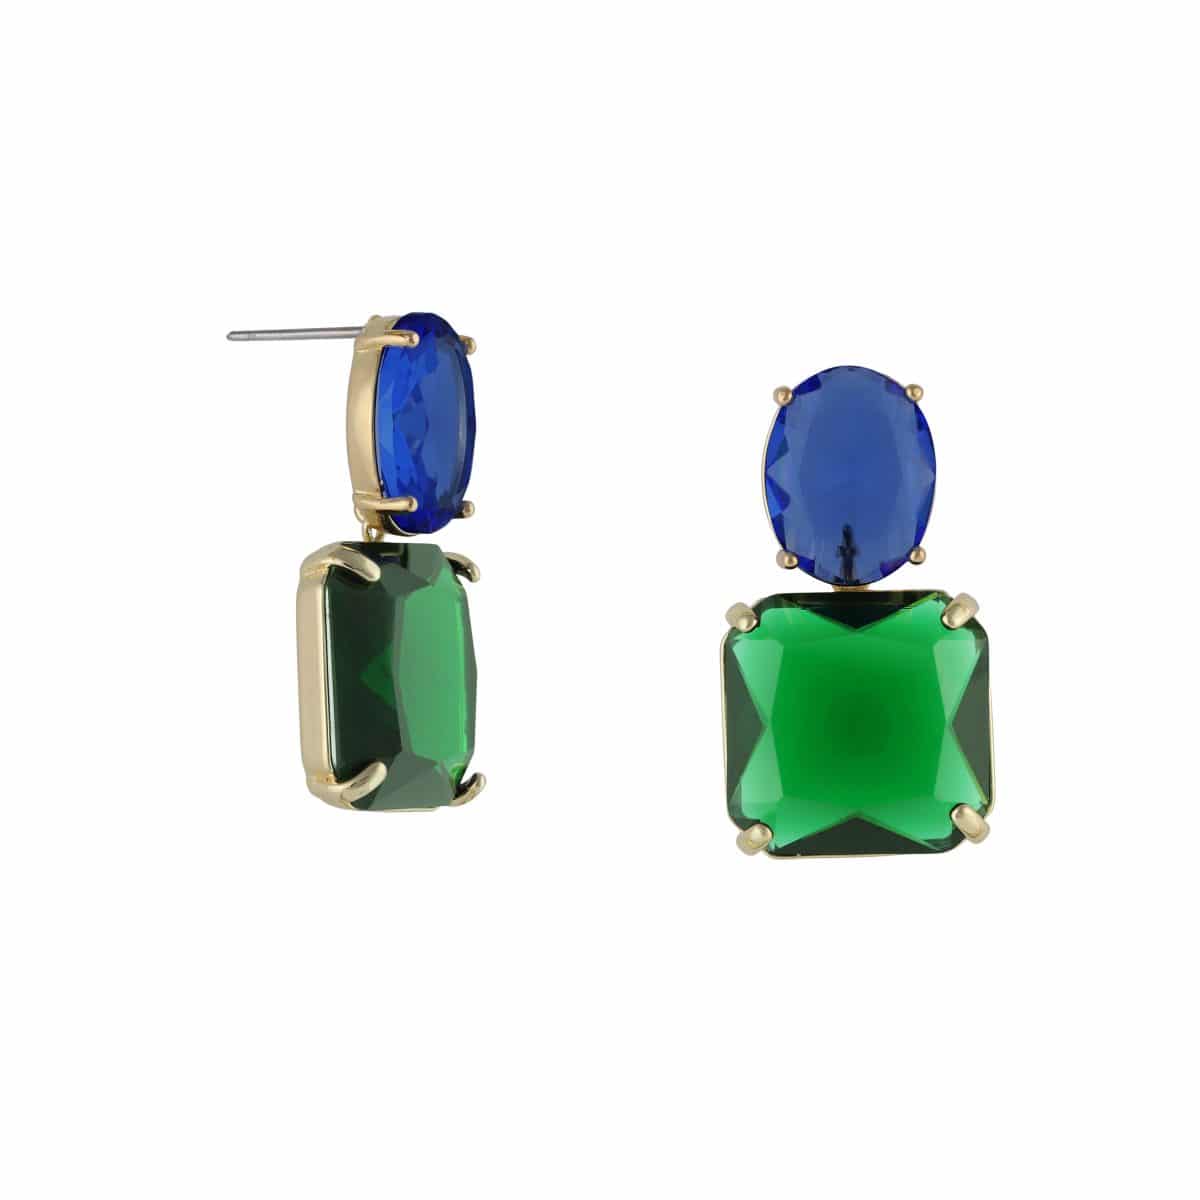 Alouette Allure Stone Cut Luxe Earrings in Blue and Emerald